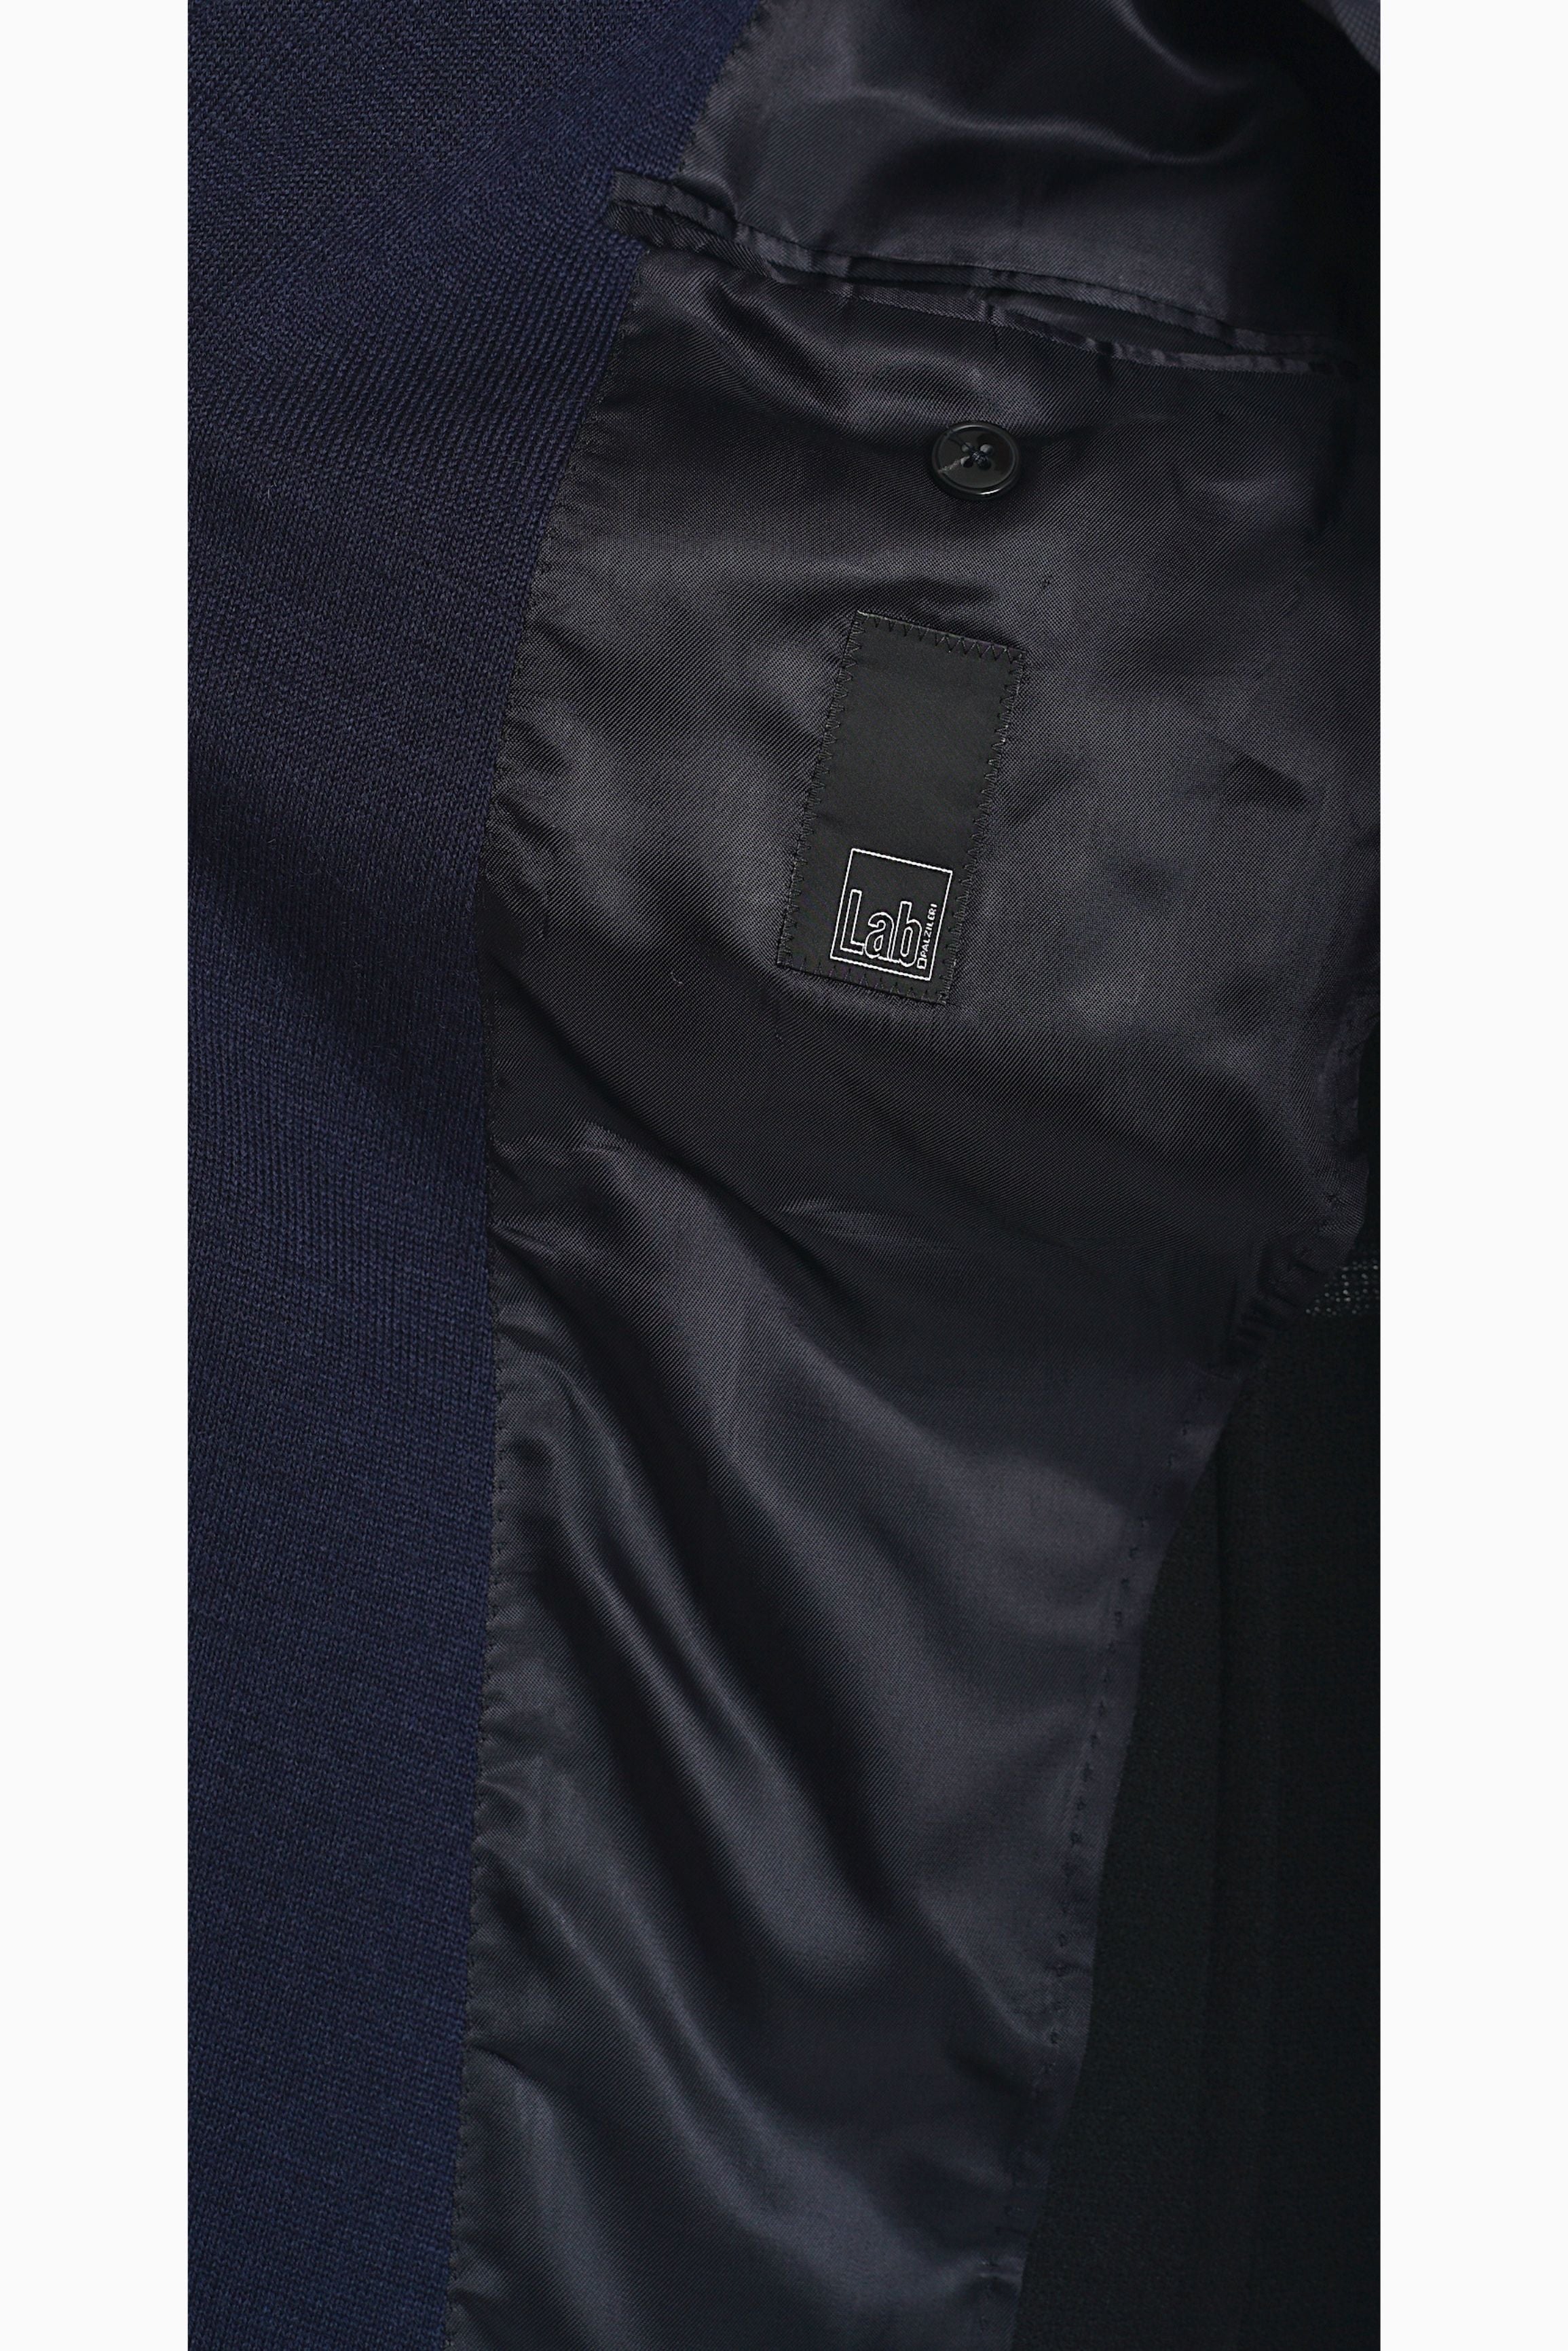 Pal Zileri Navy Blue Sport Coat - Mastroianni Fashions